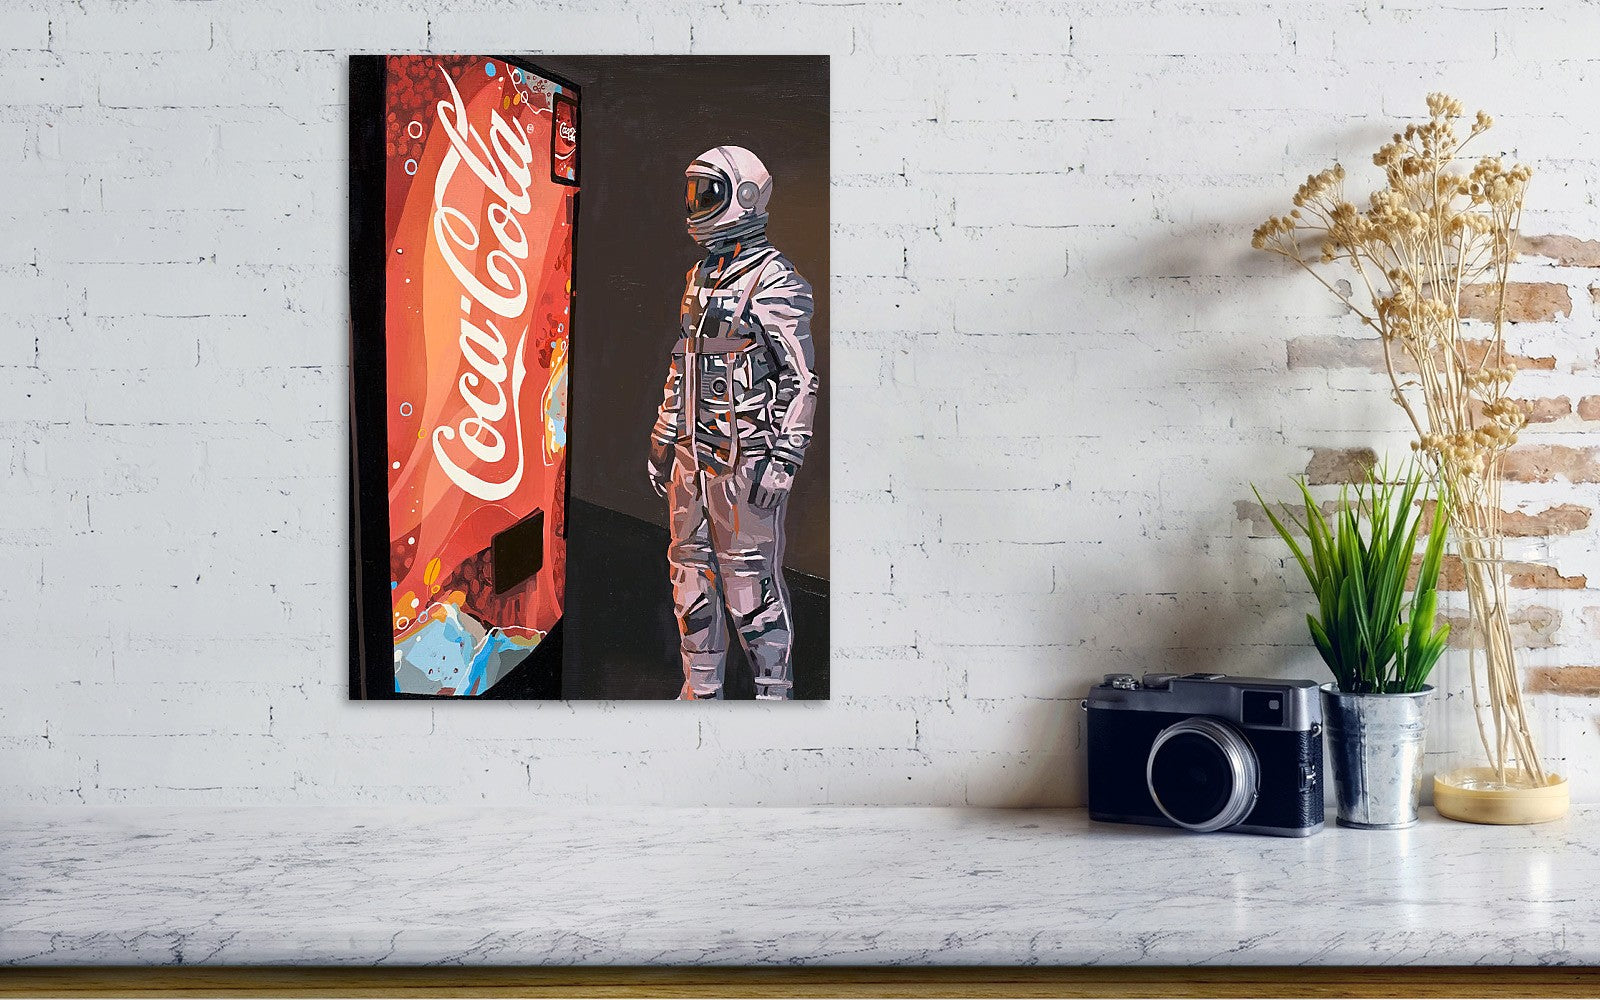 The Coke Machine Art Print Canvas And Poster, Warm Home Decor Wall Art Visual Art 1617268375347.jpg